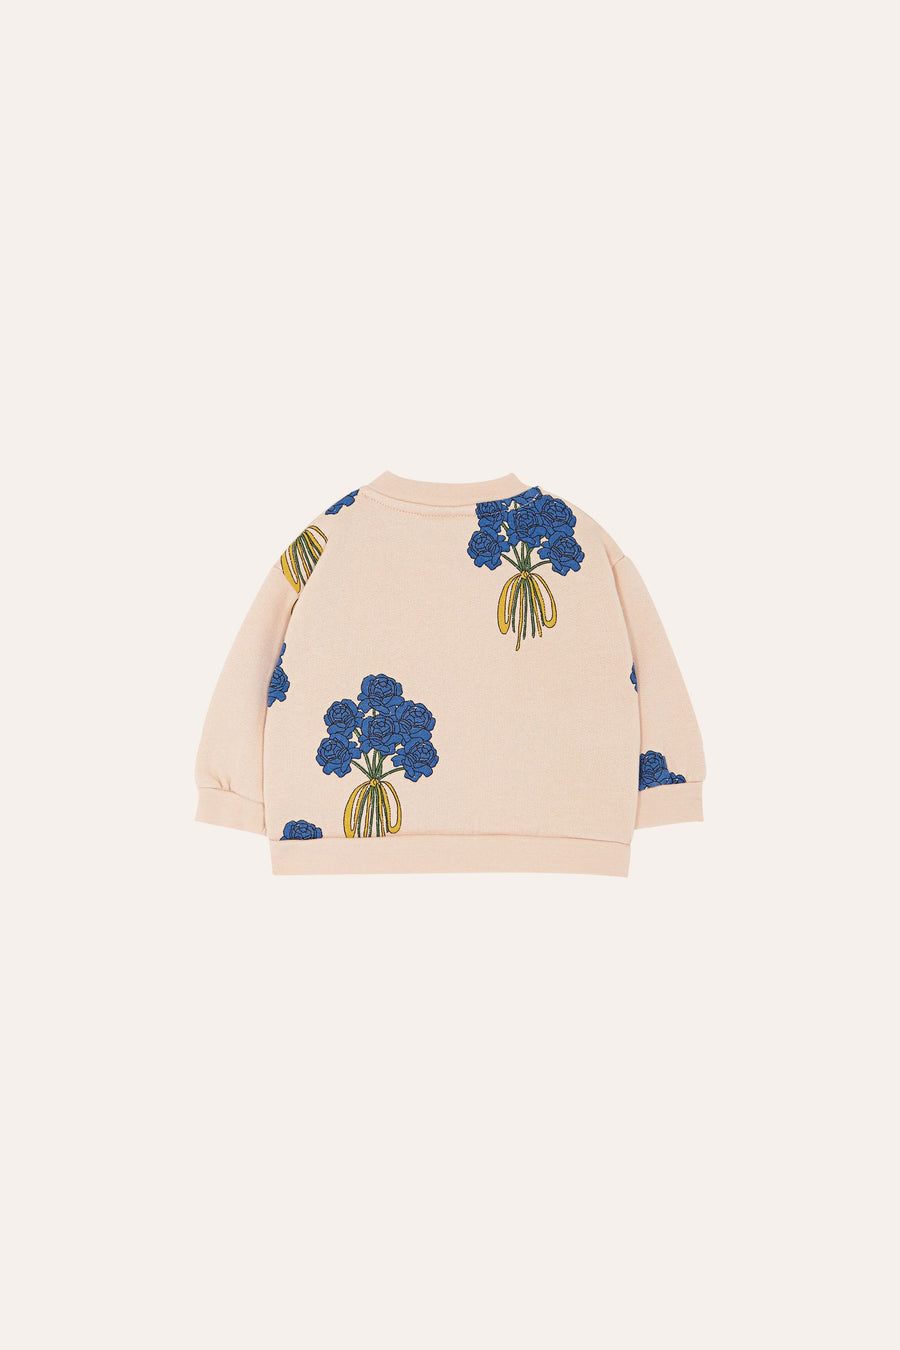 The Campamento - flowers baby sweatshirt